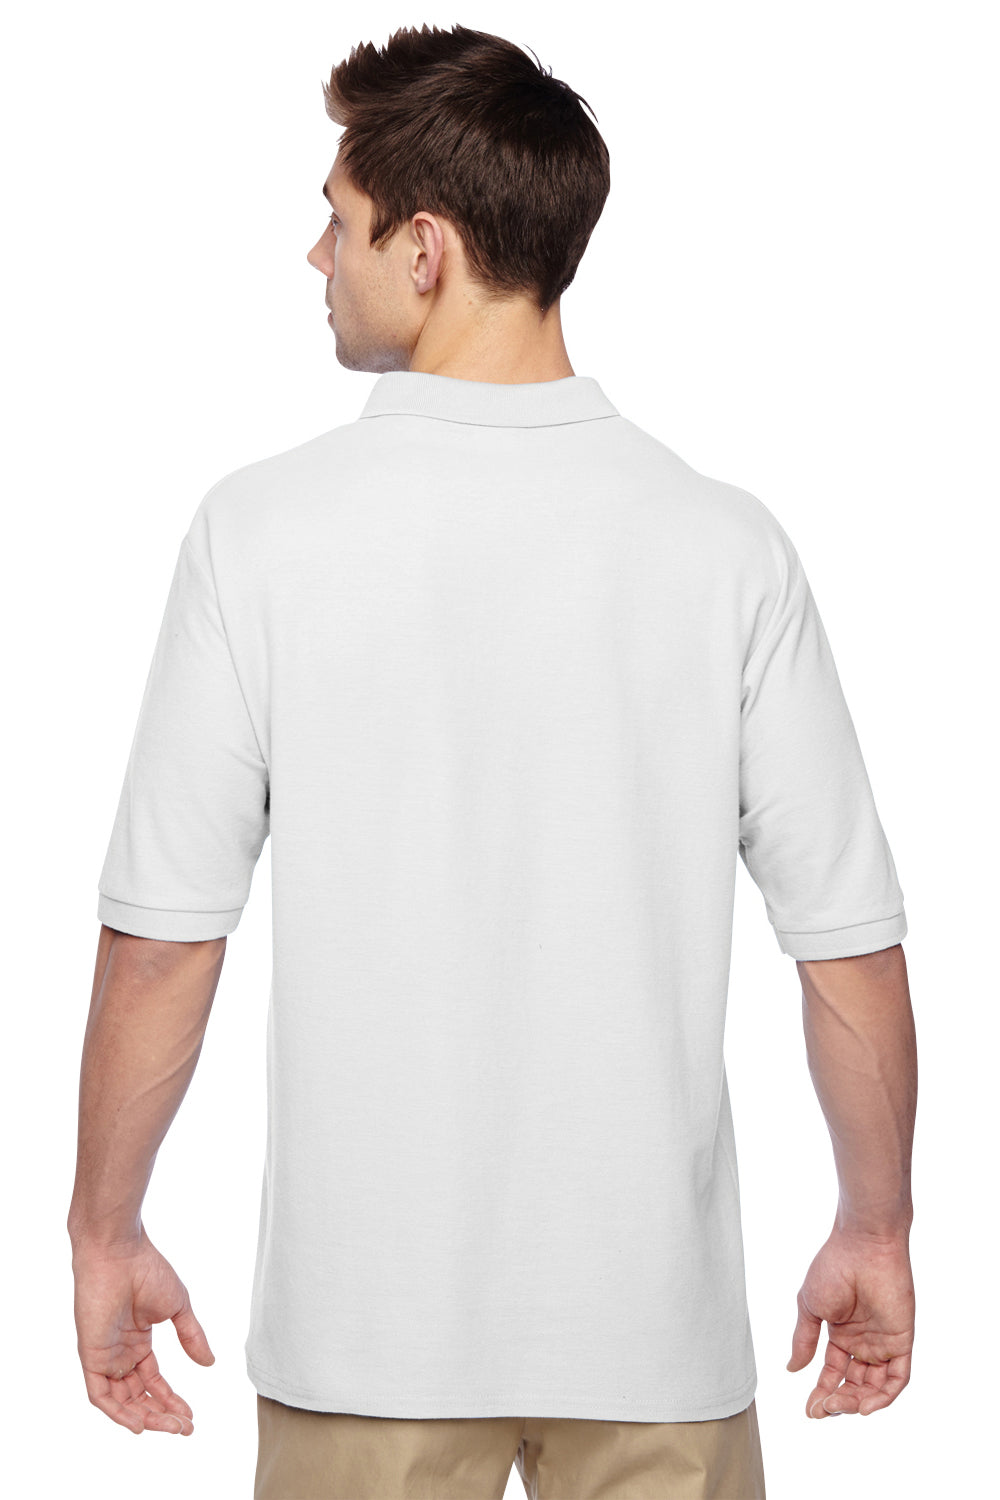 Jerzees 537MSR Mens Easy Care Moisture Wicking Short Sleeve Polo Shirt White Back